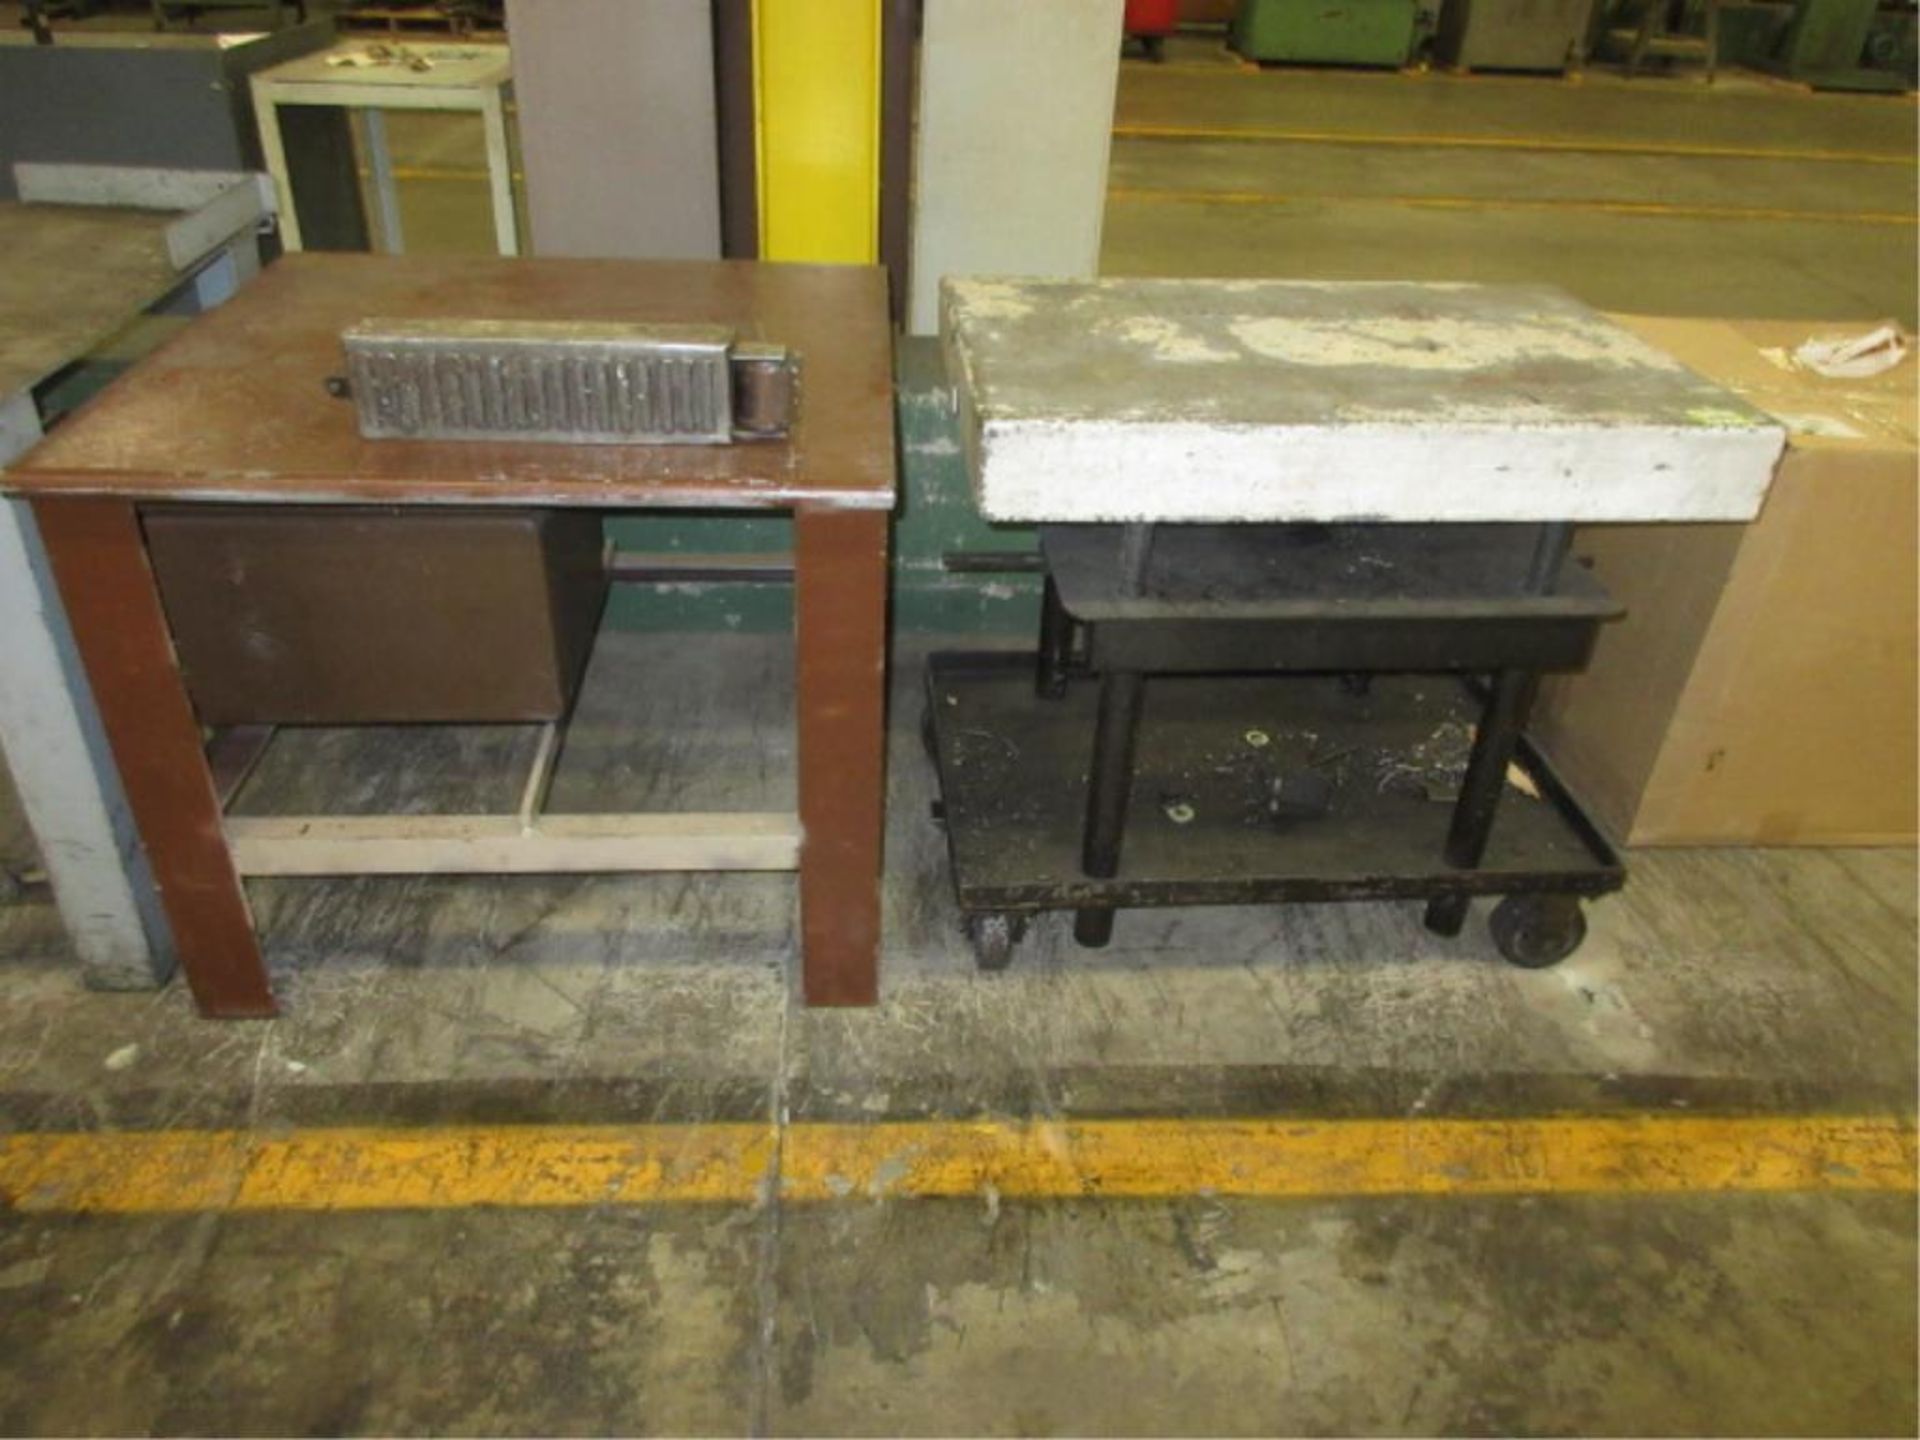 Shop Tables. Lot (7pcs) Heavy Duty Steel Shop Tables. HIT# 2179043. Loc: main floor. Asset Located - Image 2 of 5